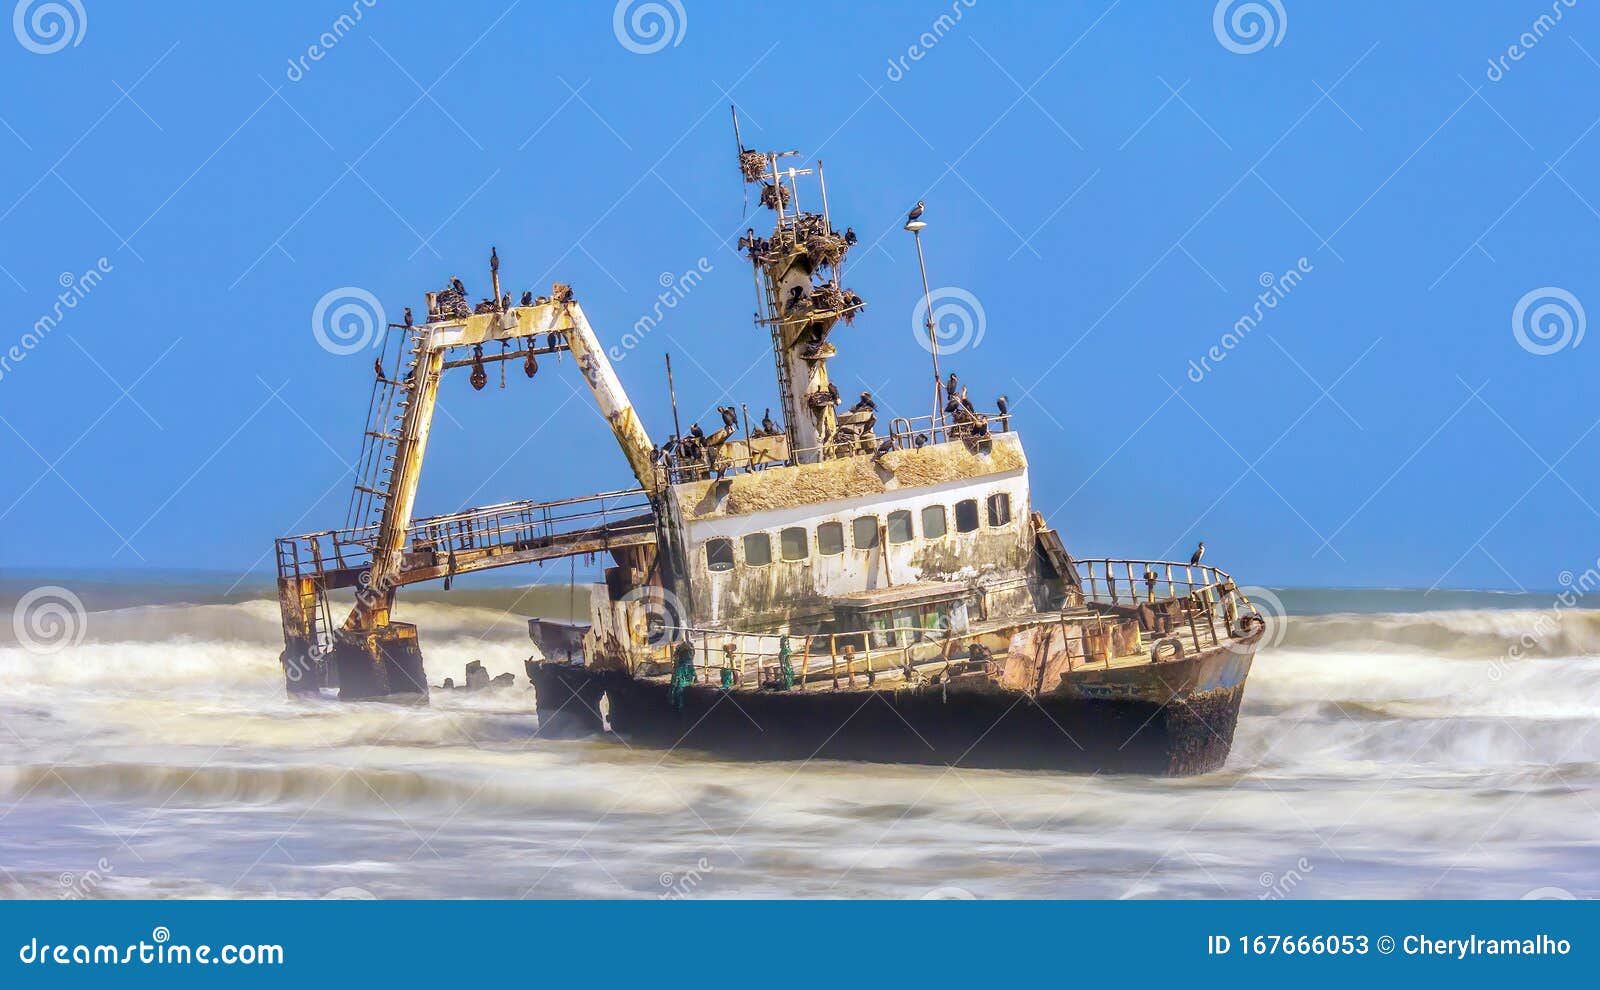 Large Fishing Net Thick Rope Cream White maritime Fishing Trawler Boat Ship 